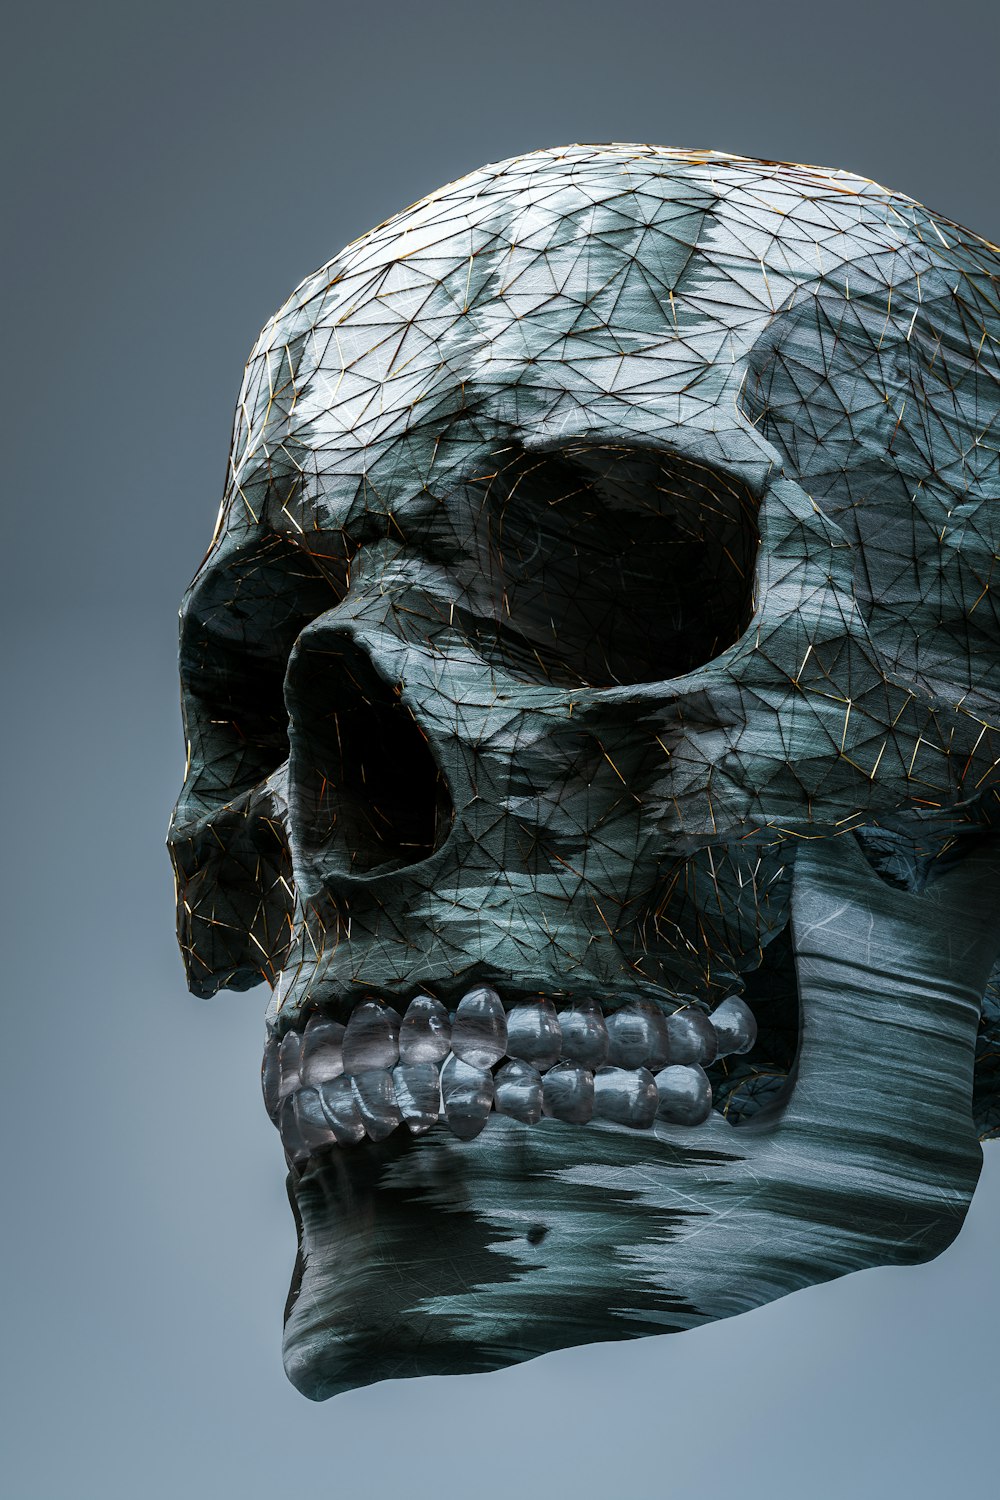 a skull with teeth